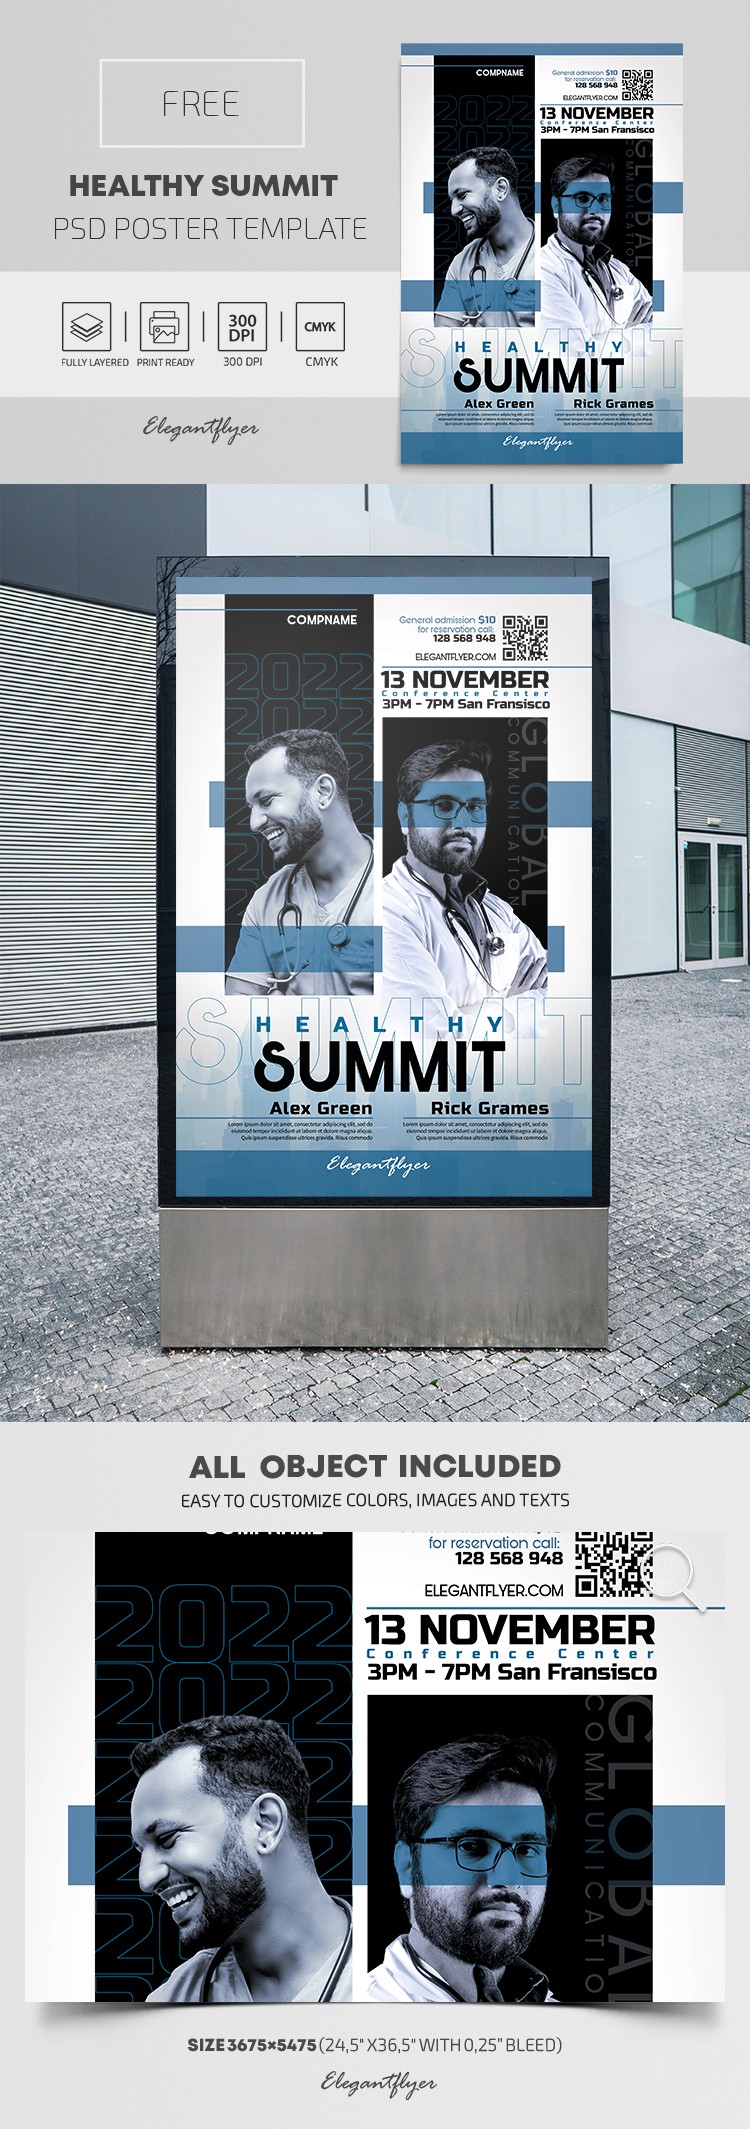 Healthy Summit Poster by ElegantFlyer